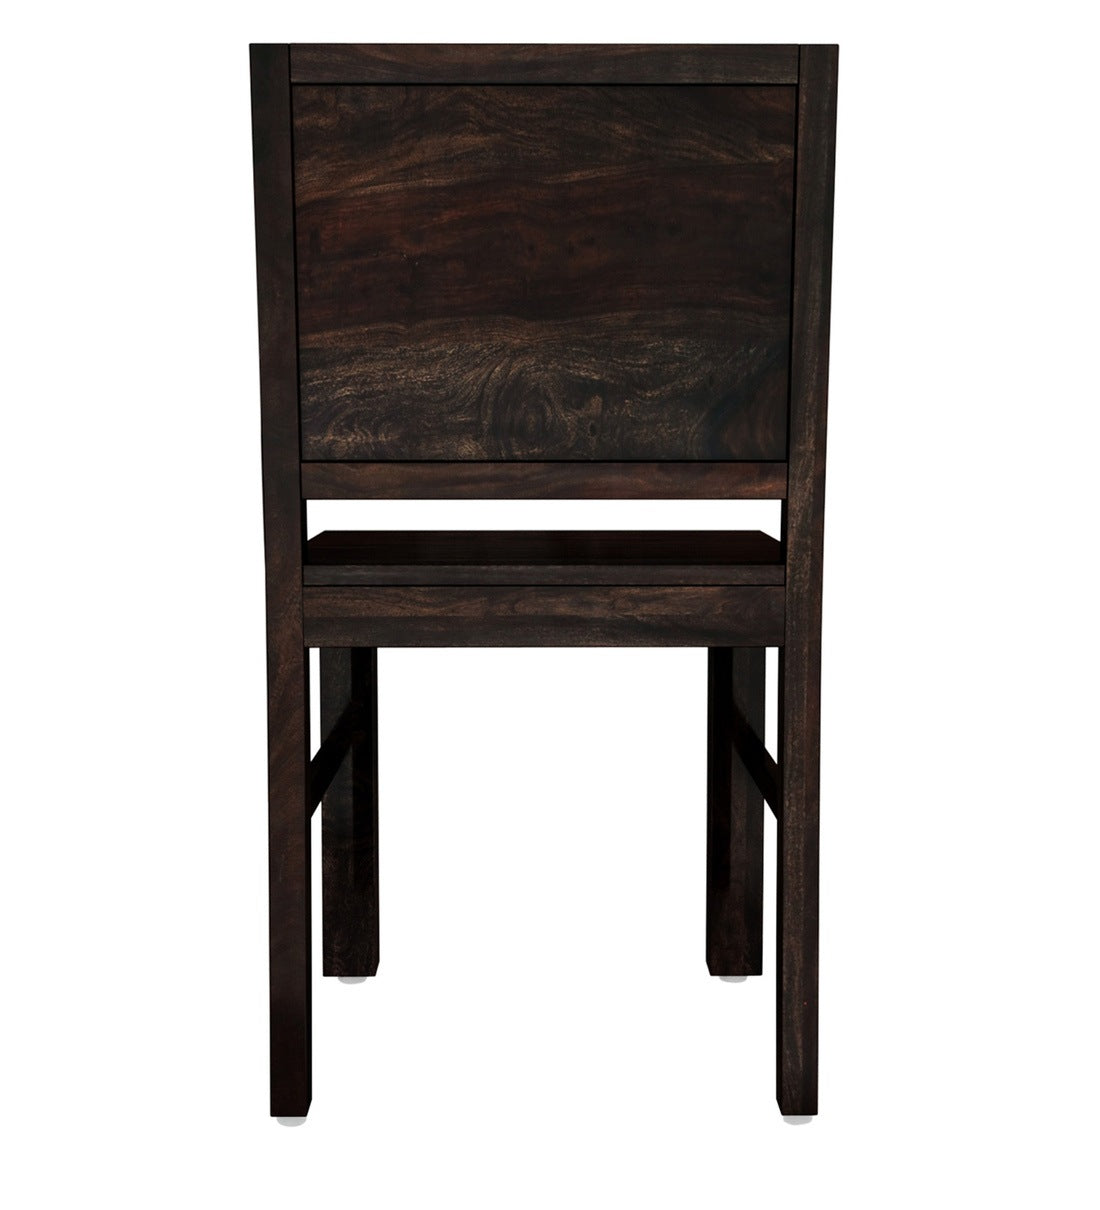 Acro Wooden 6 Seater Dining Table Set - Rajwada Furnish